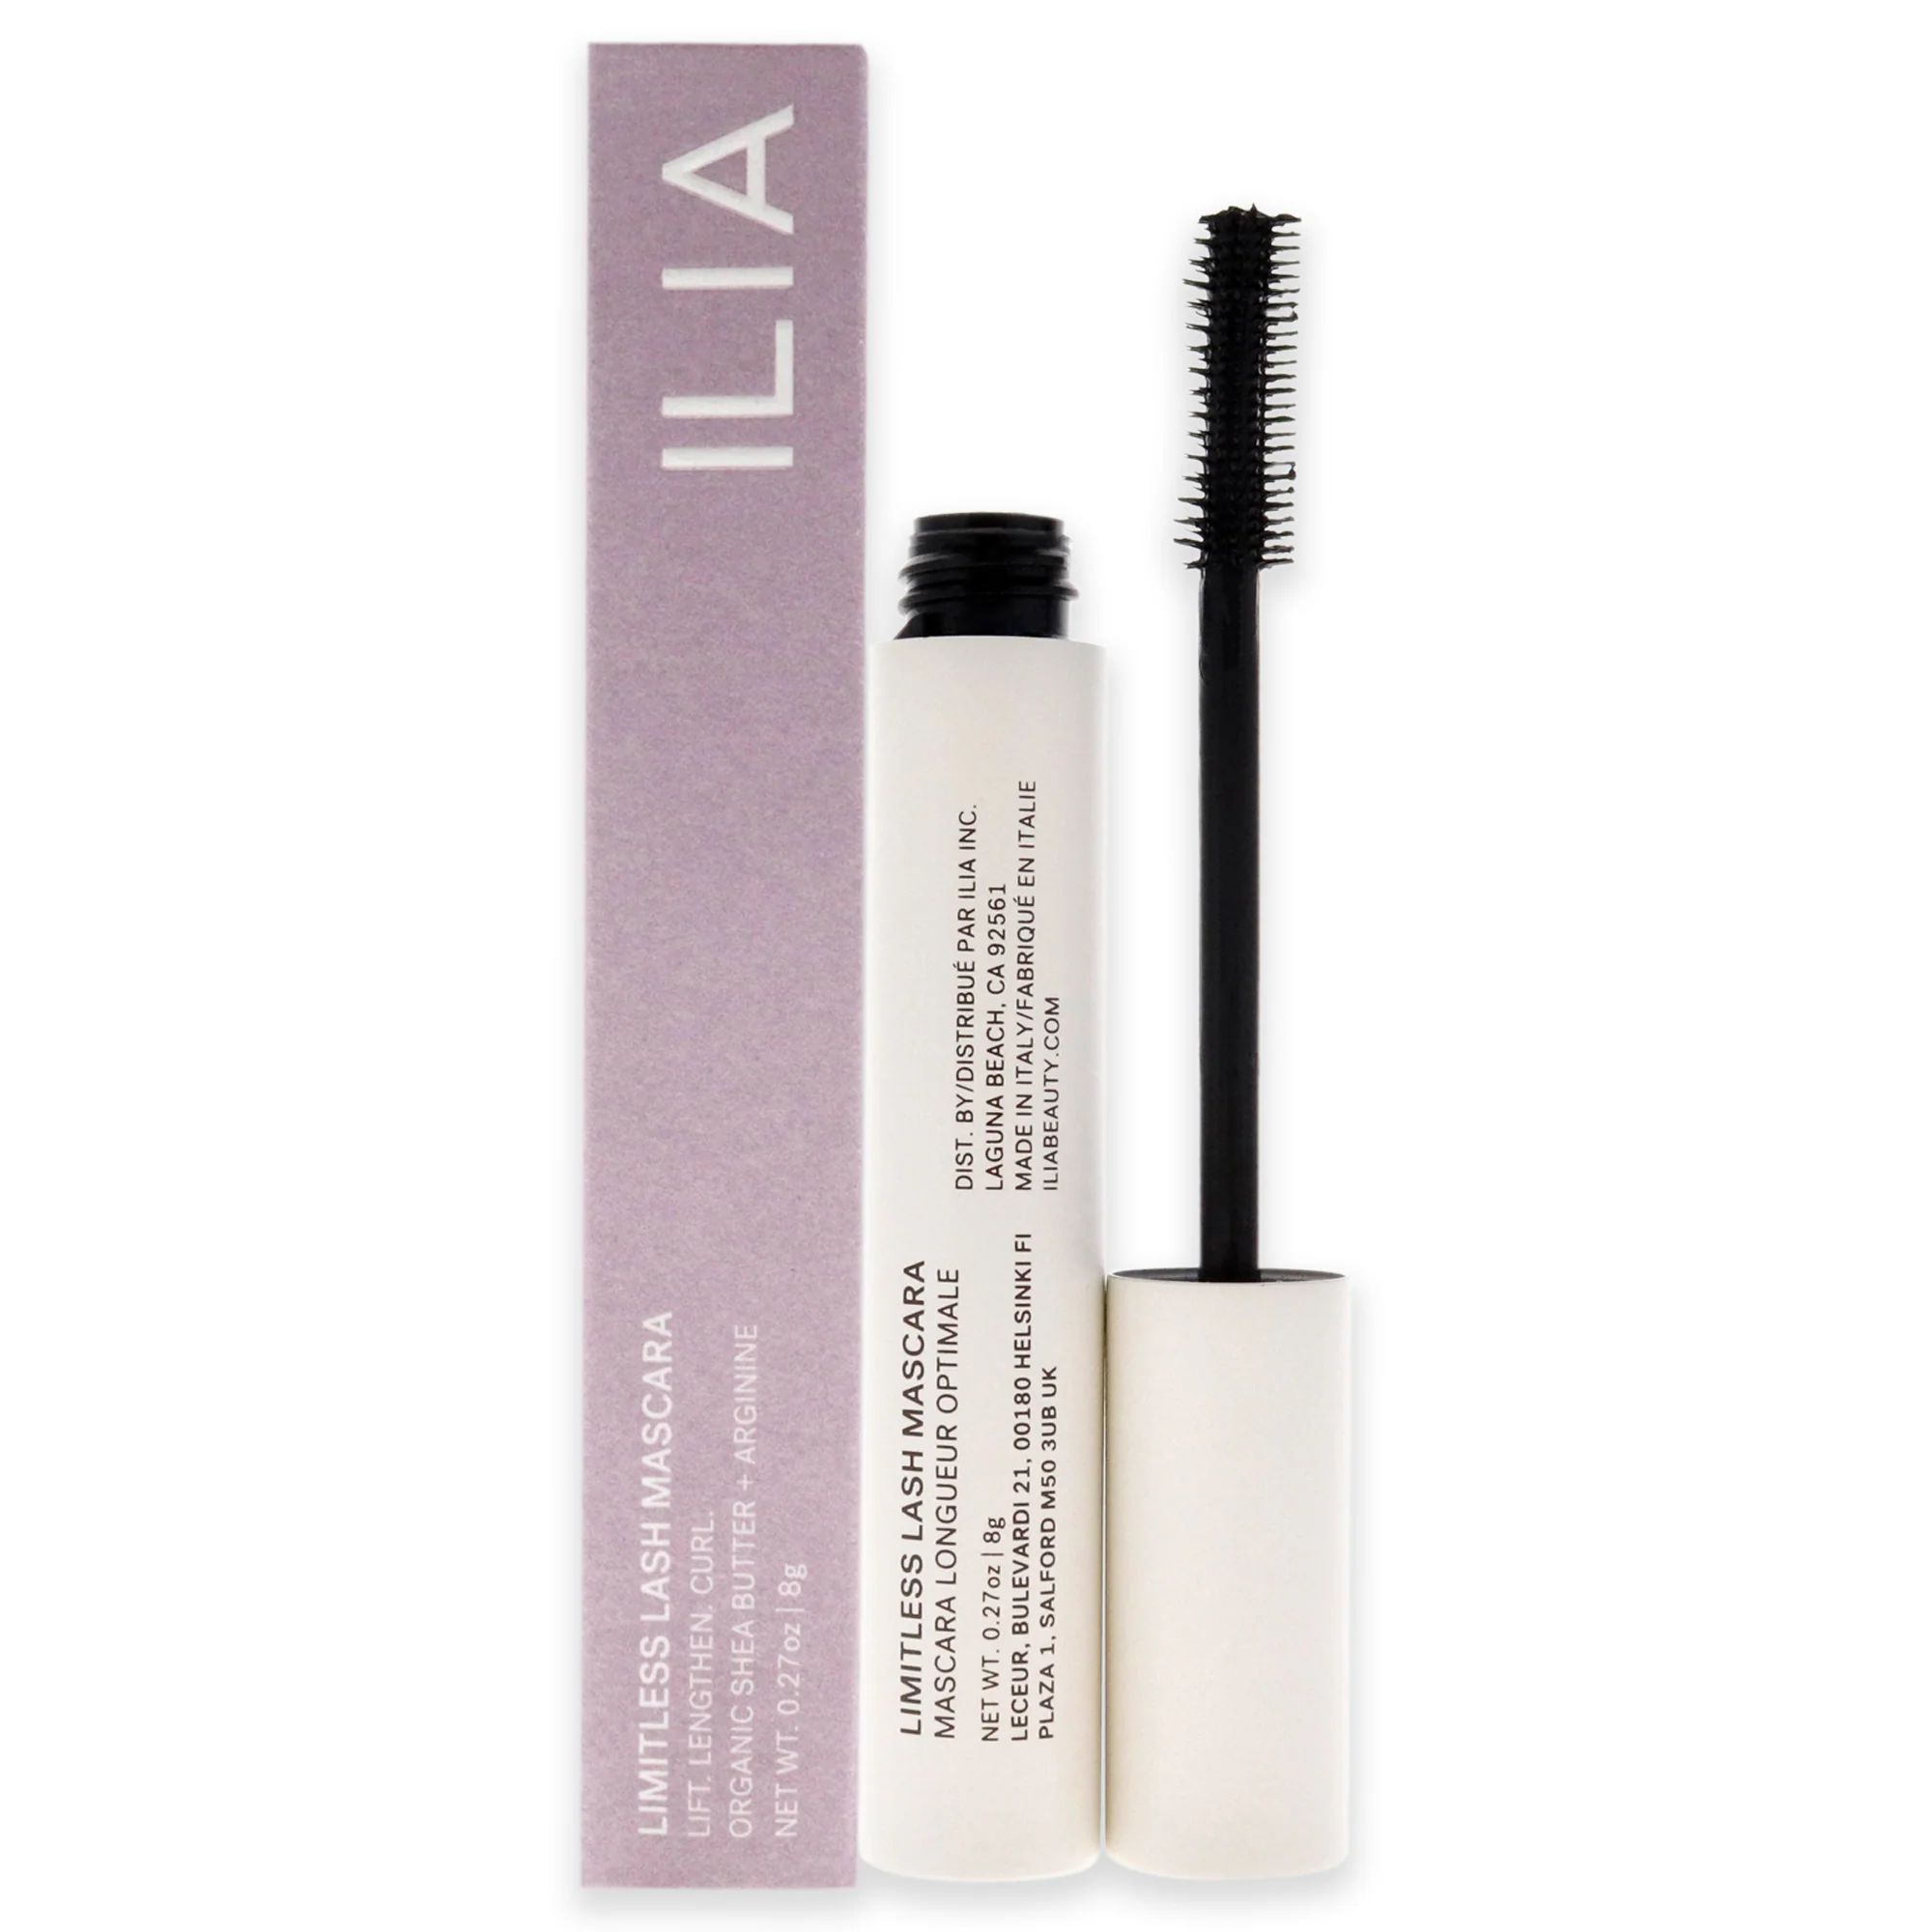 ILIA Beauty Limitless Lash Mascara - After Midnight For Women 0.27 oz Mascara | Shop Premium Outlets